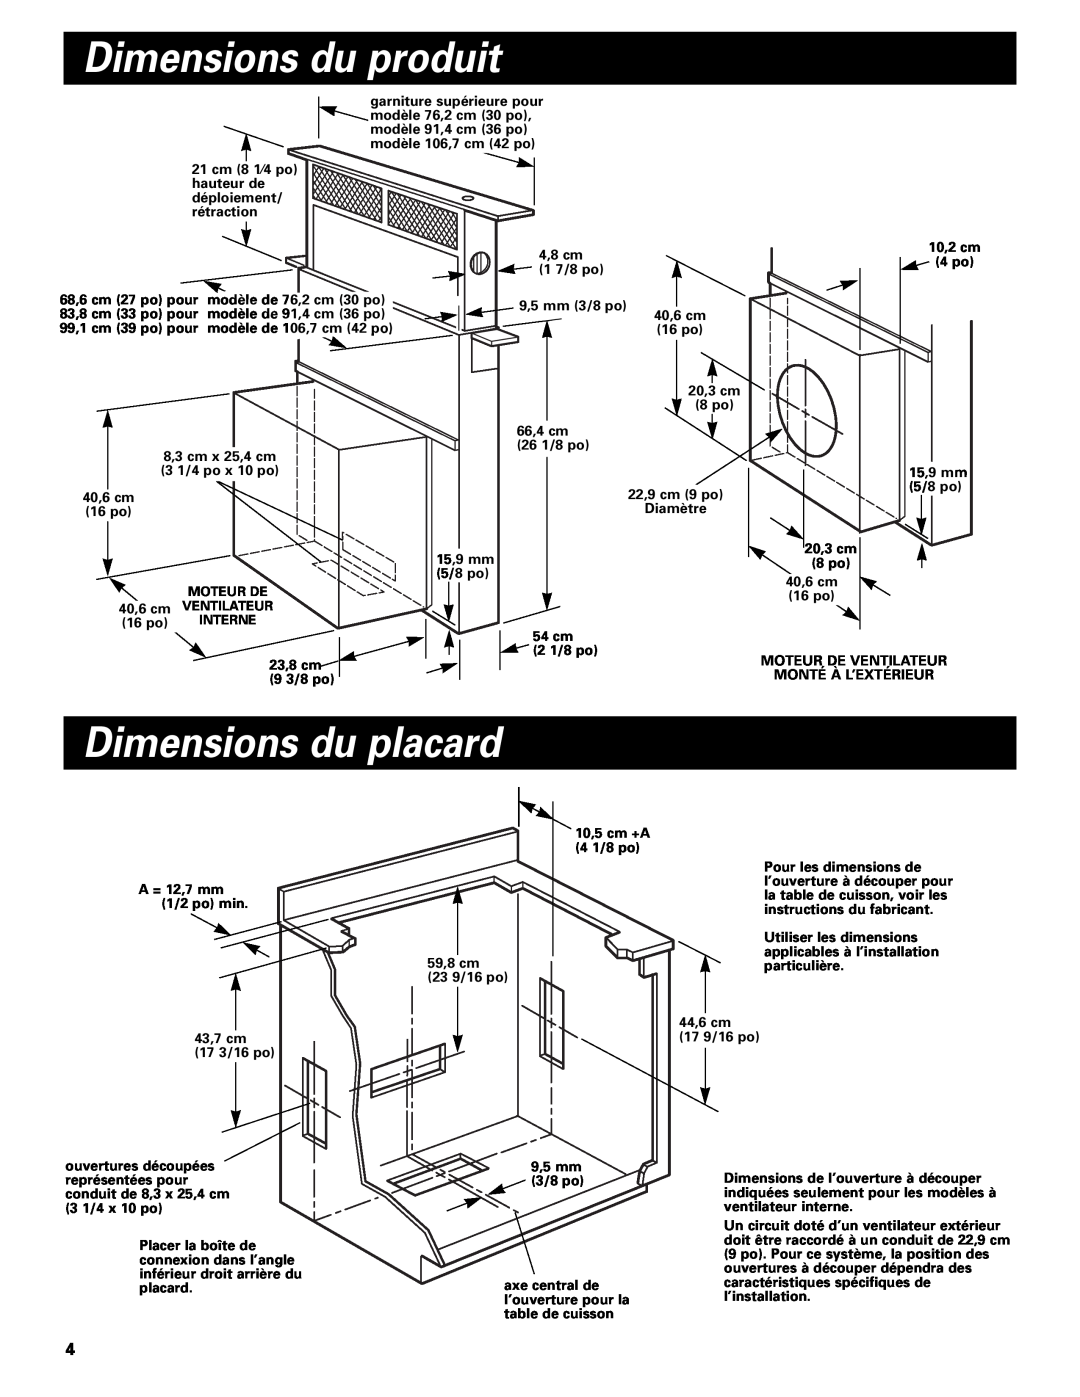 Whirlpool Vent system installation instructions Dimensions du produit, Dimensions du placard 